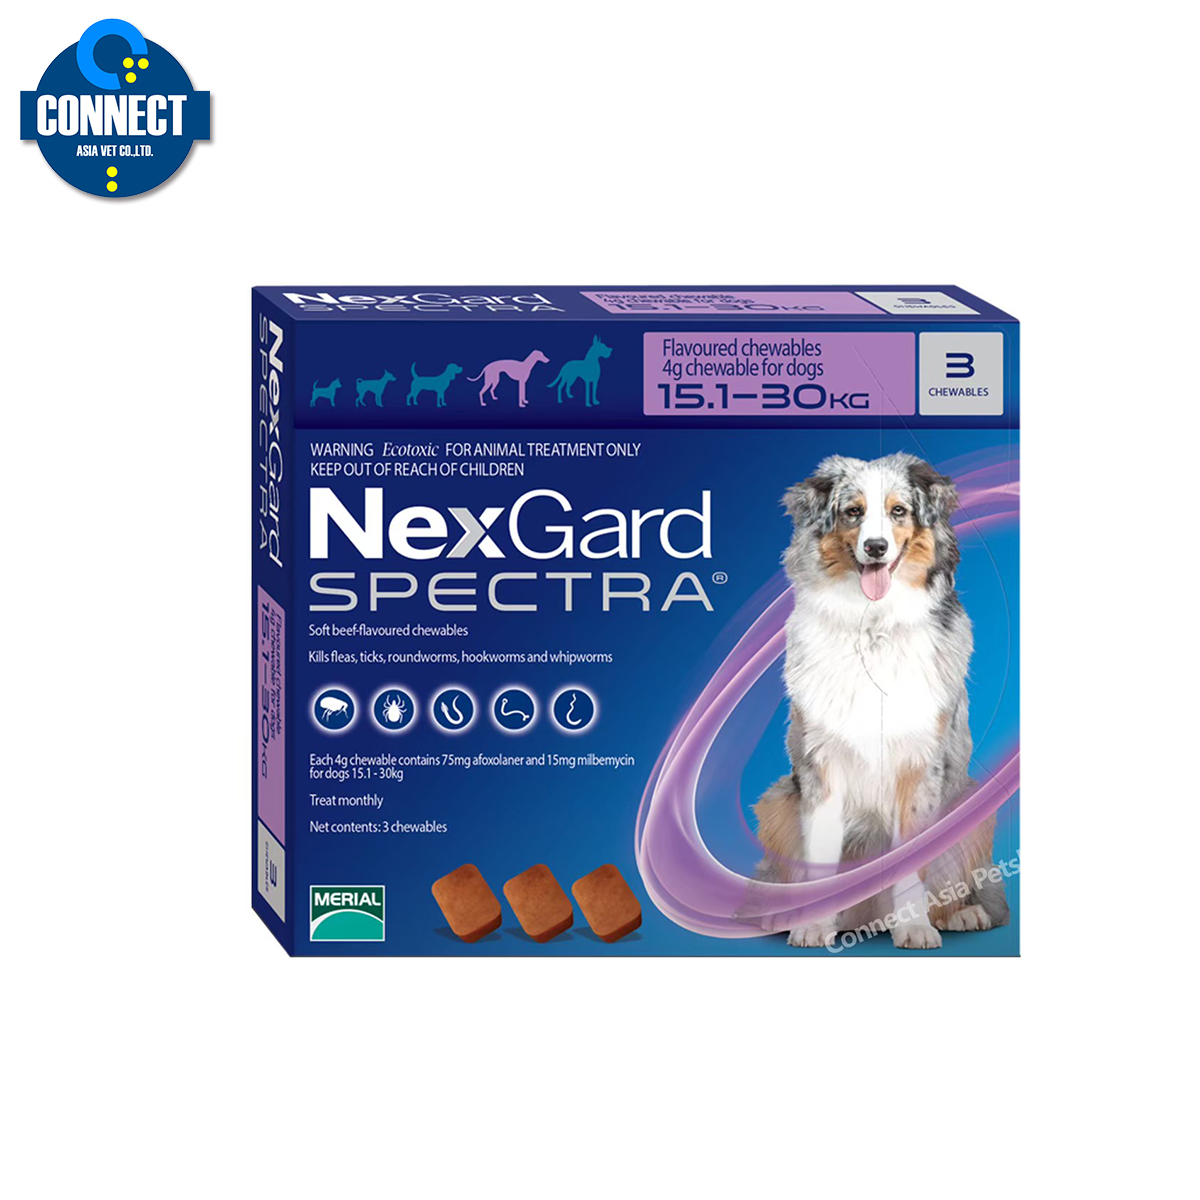 NEXGARD SPECTRA ยาเม็ดชนิดเคี้ยว ป้องกันเห็บหมัด สำหรับสุนัข น้ำหนัก 15-30 KG.